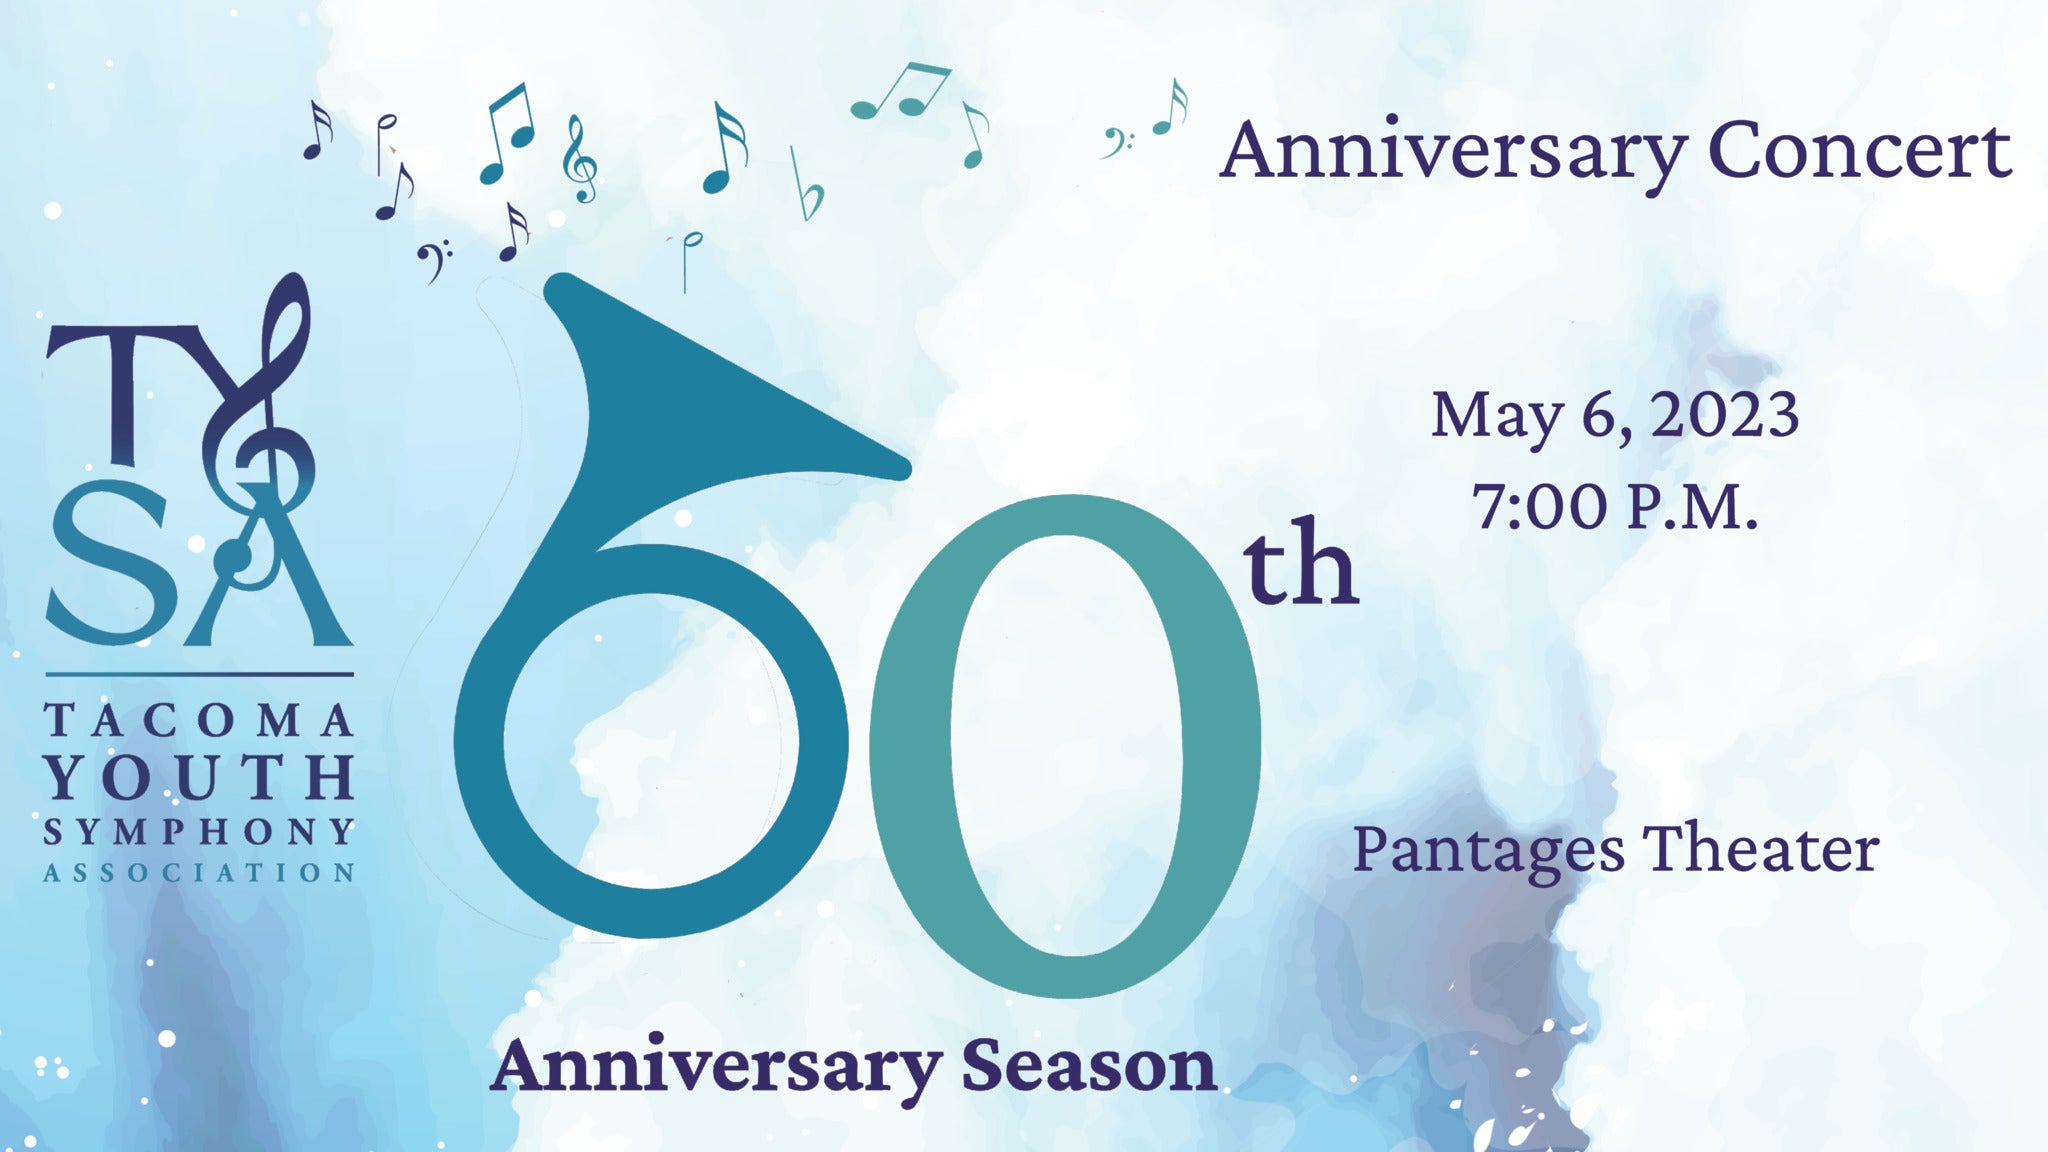 Tacoma Youth Symphony: A 60th Anniversary Concert